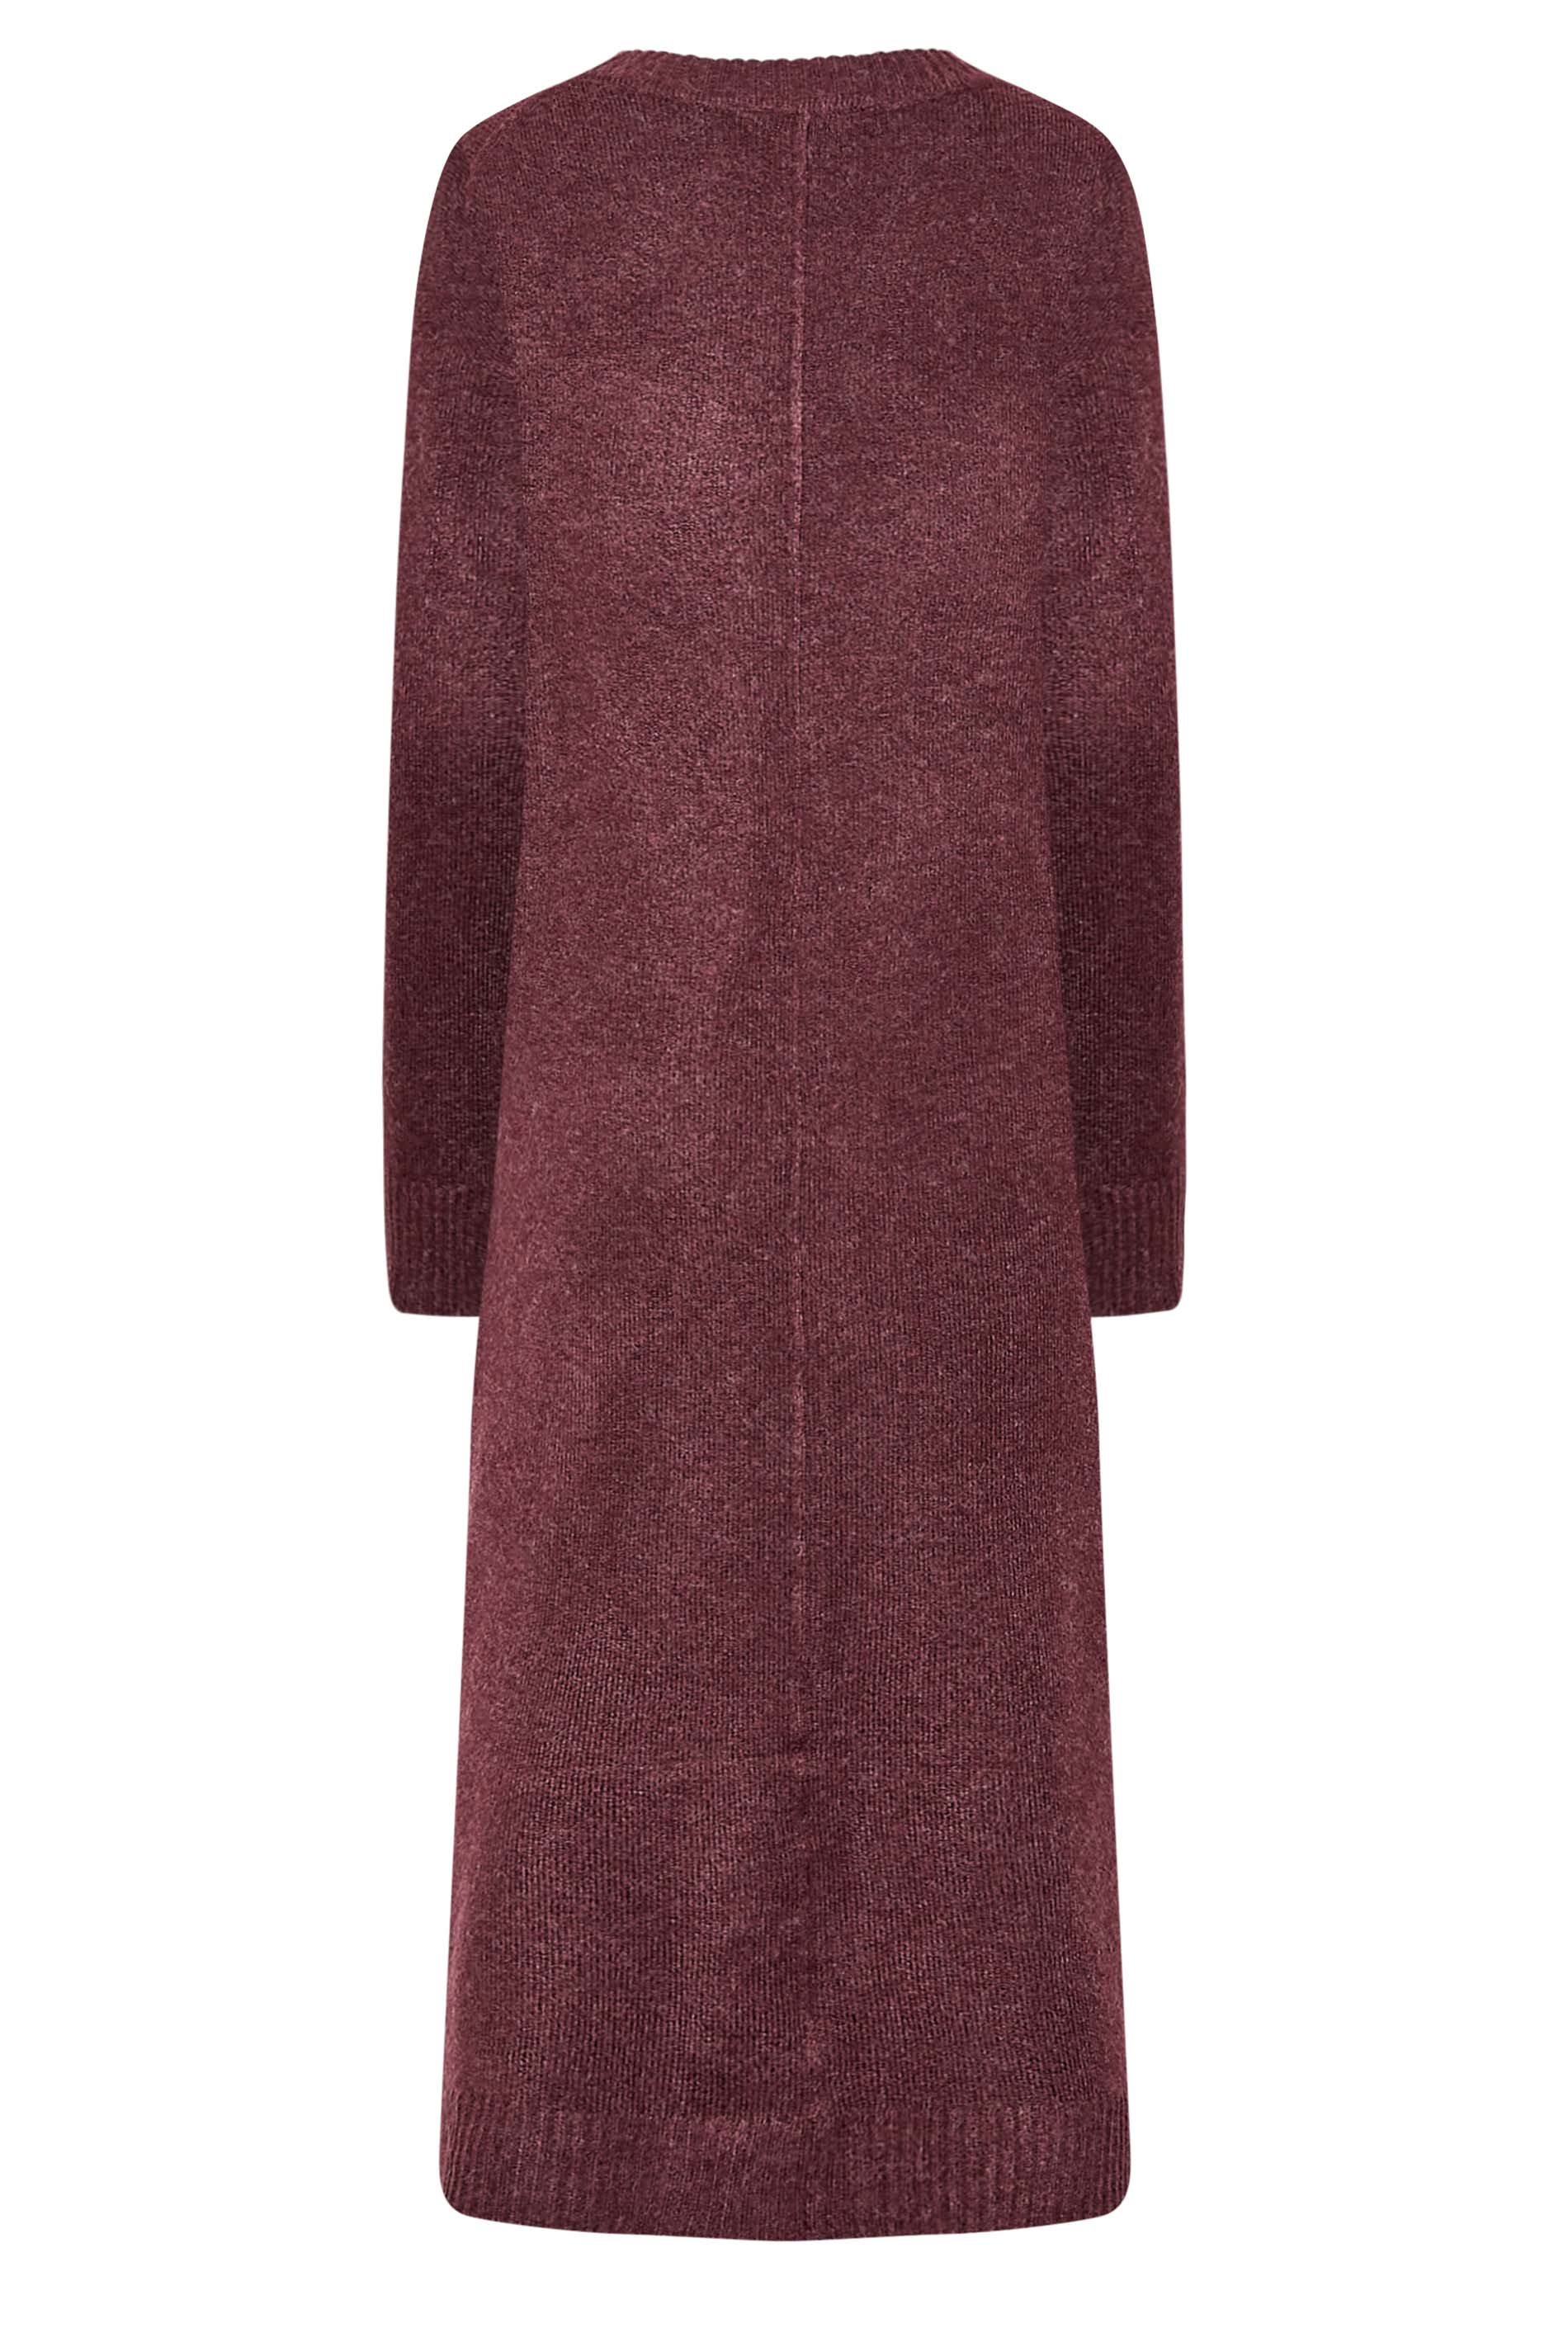 LTS Tall Women's Burgundy Red Knitted Midi Dress | Long Tall Sally  3